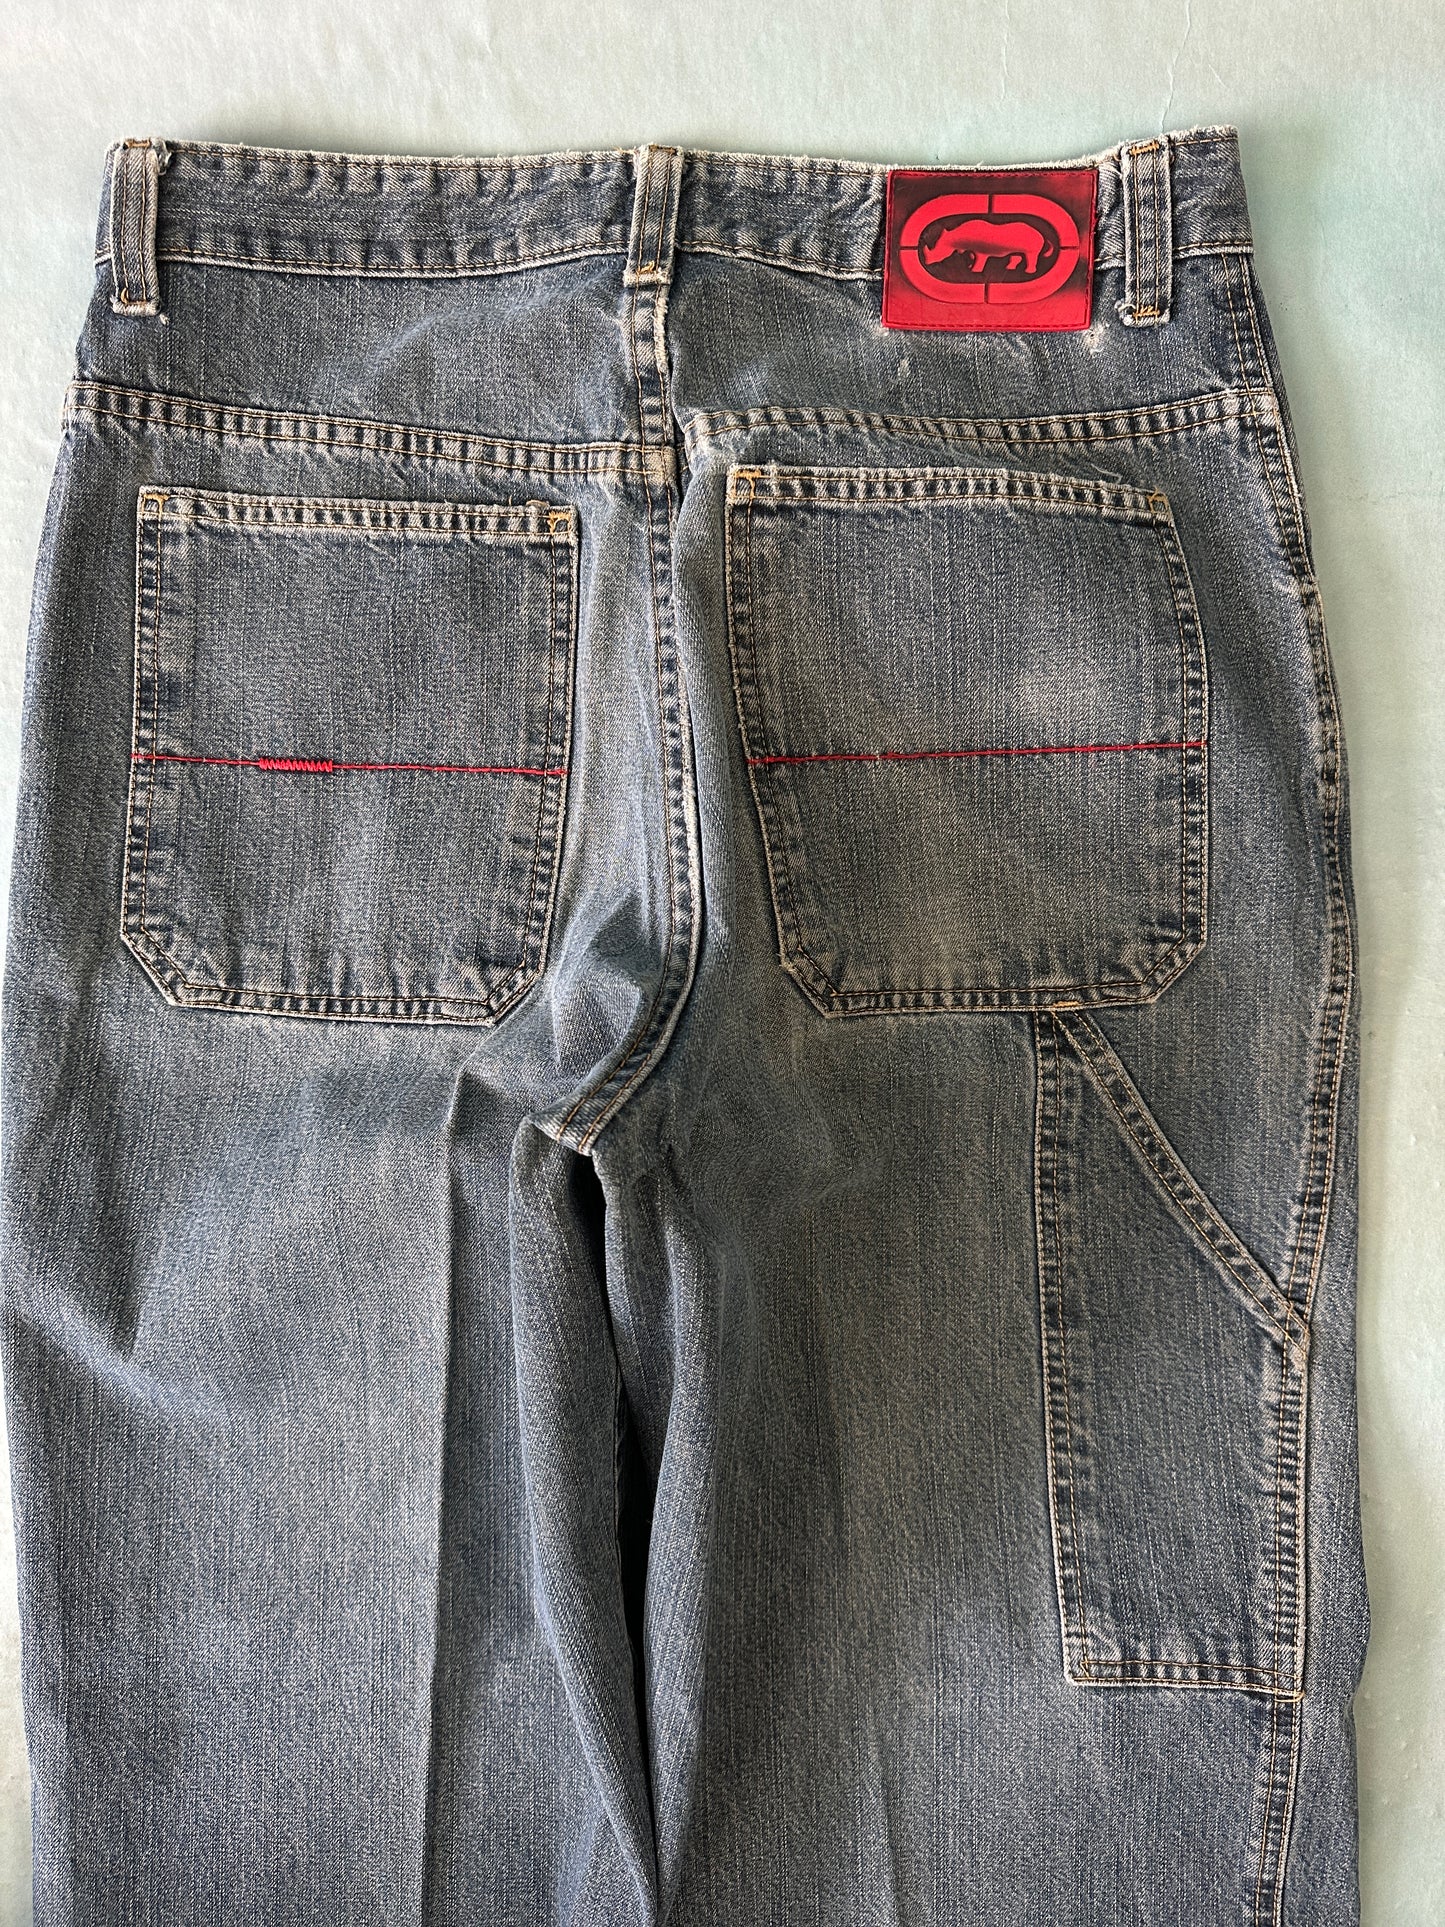 Ecko Carpenter Vintage Pants - 34